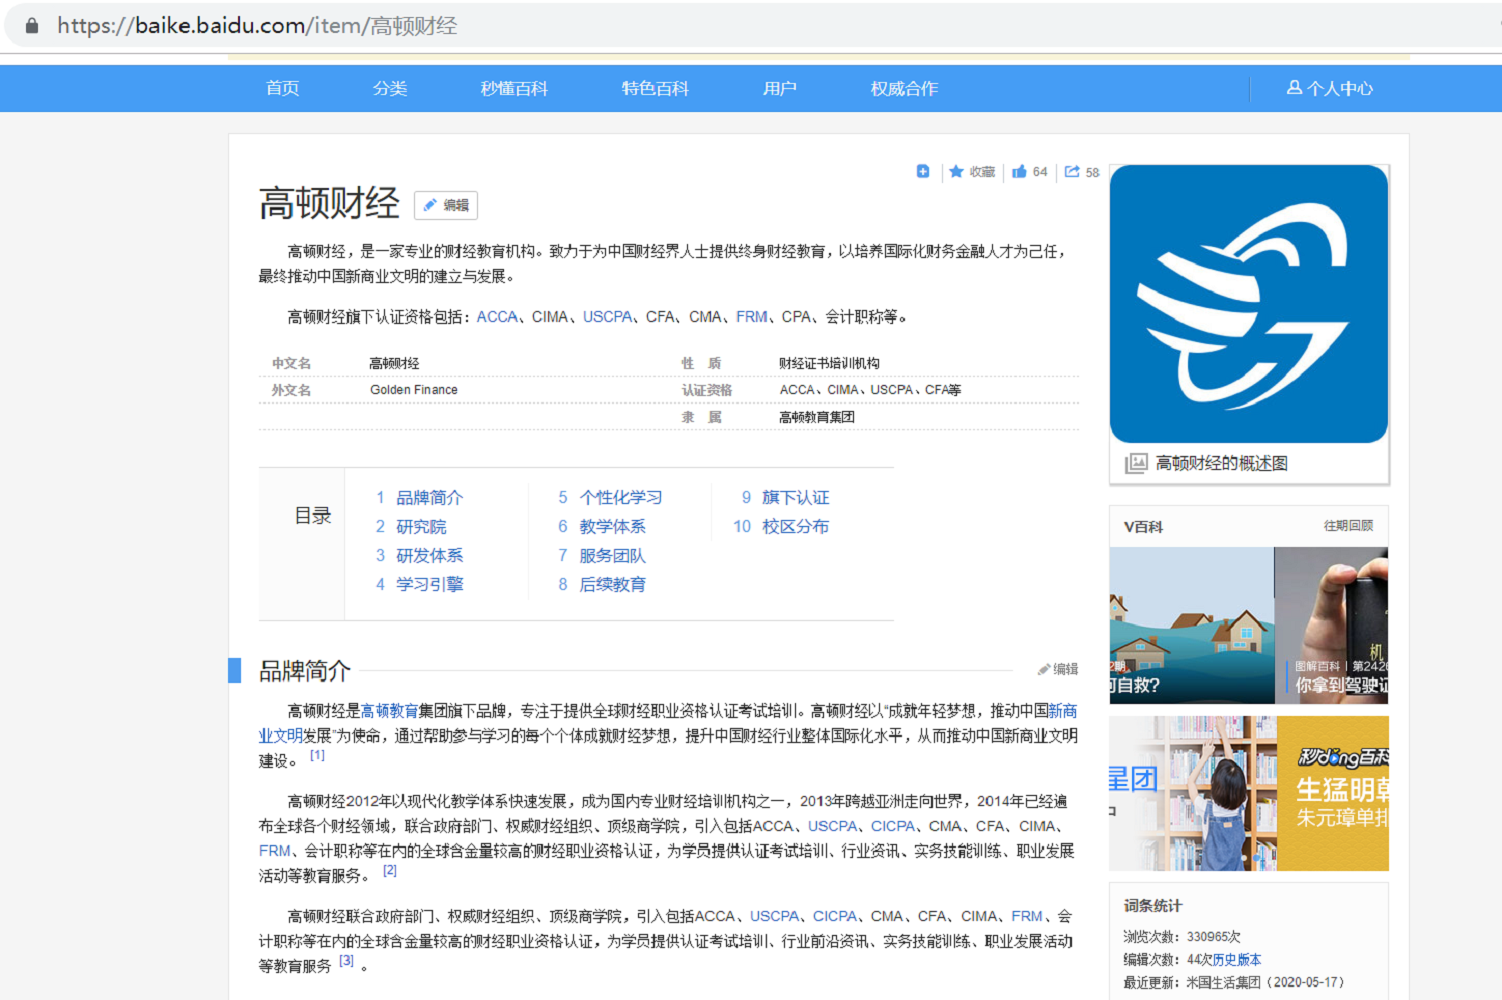 Brand Encyclopedia Encyclopedia - Gordon Finance - Baidu Encyclopedia Encyclopedia